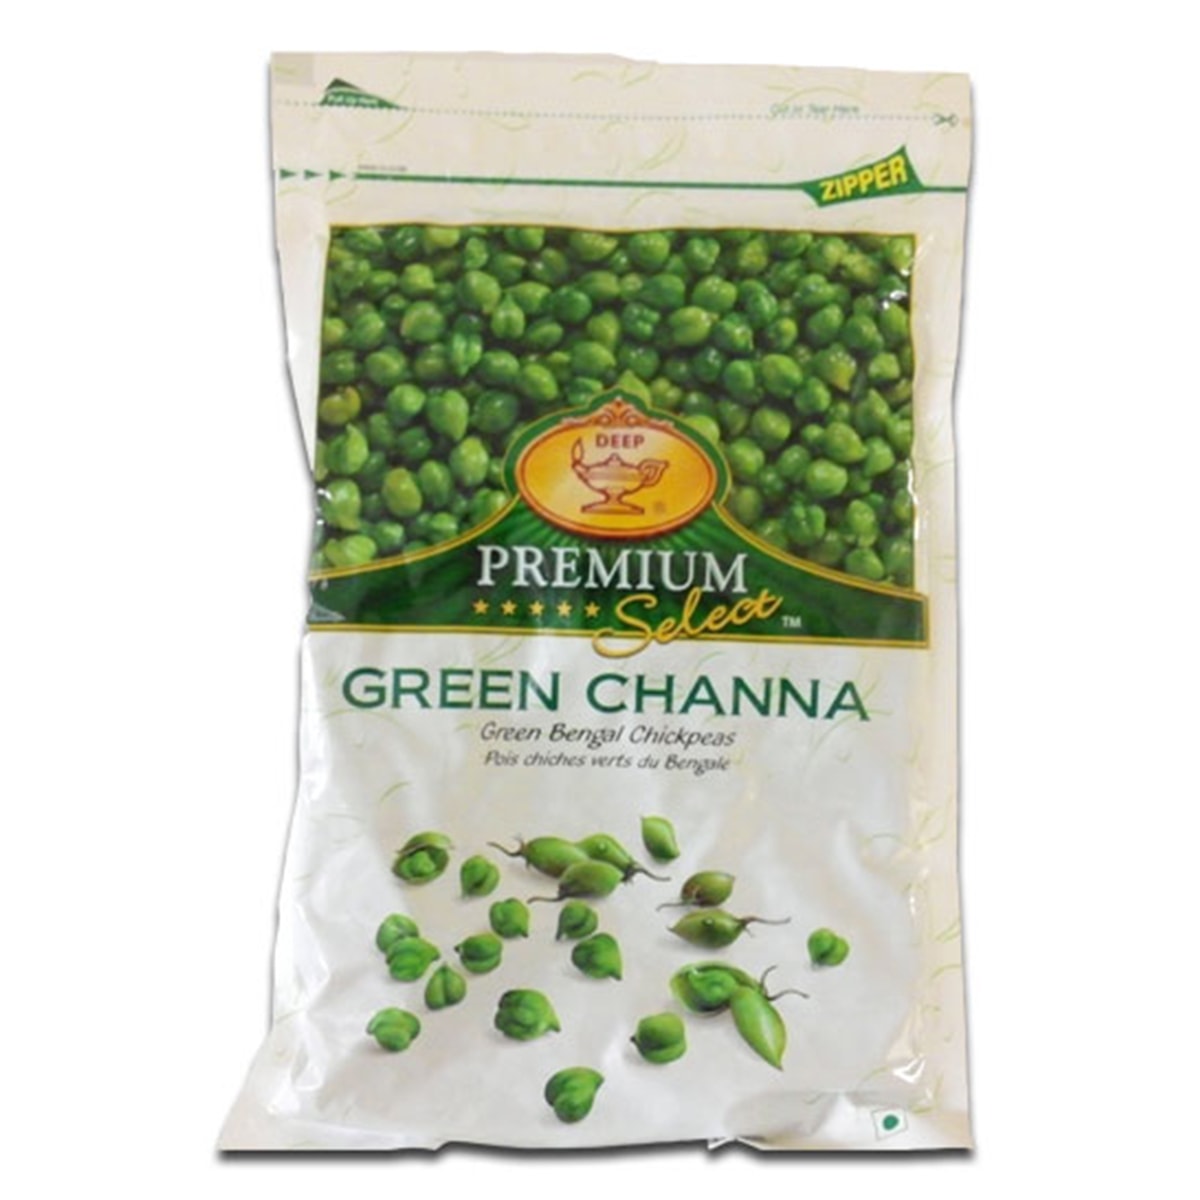 Buy Deep Foods Green Channa (Green Bengal Chickpeas) Frozen - 340 gm